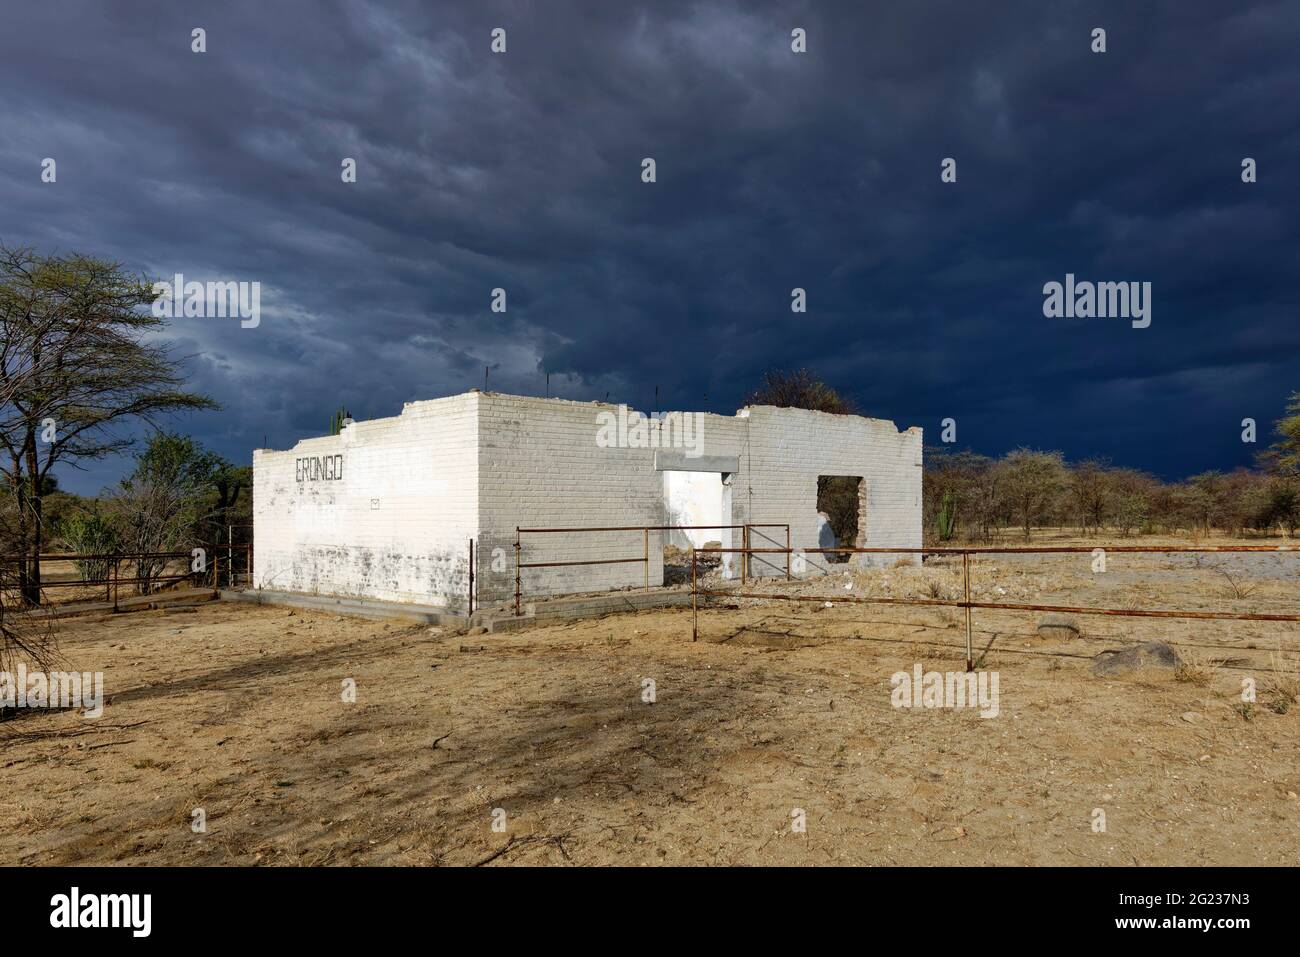 Rain clouds above a ruined building near Omaruru, farmland in rainy season, Erongo Region, Namibia Stock Photo